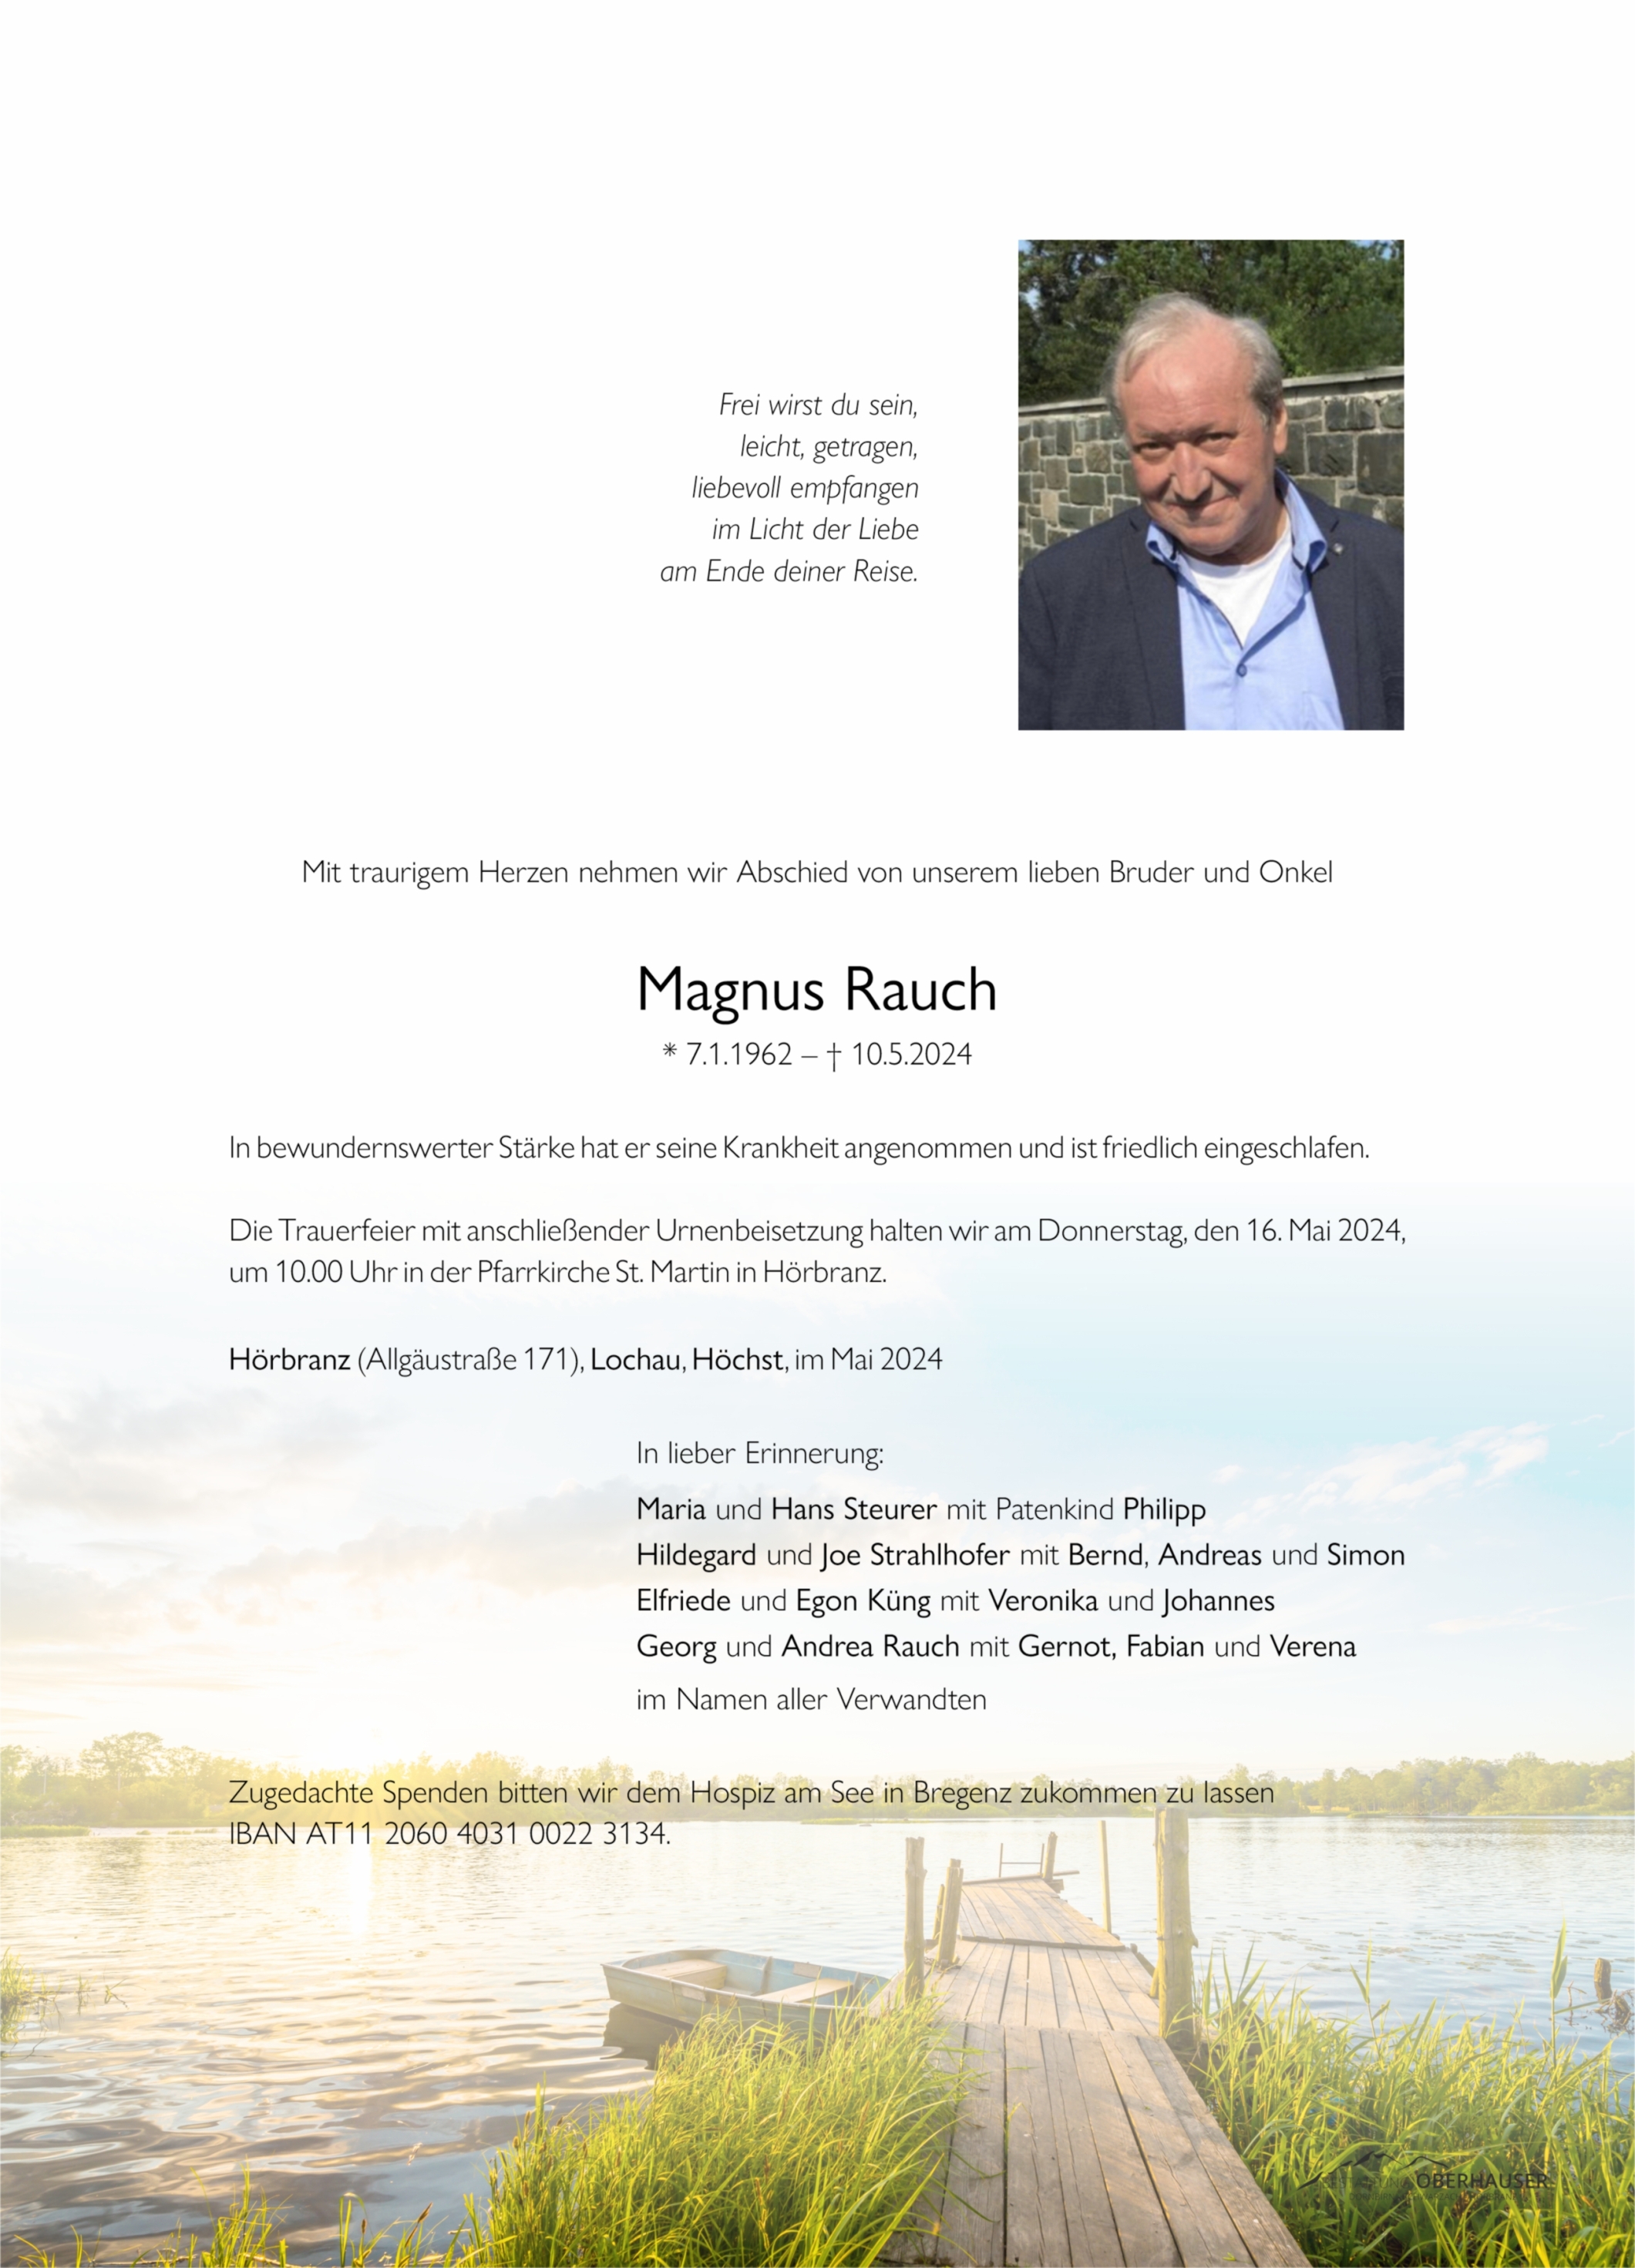 Magnus Rauch